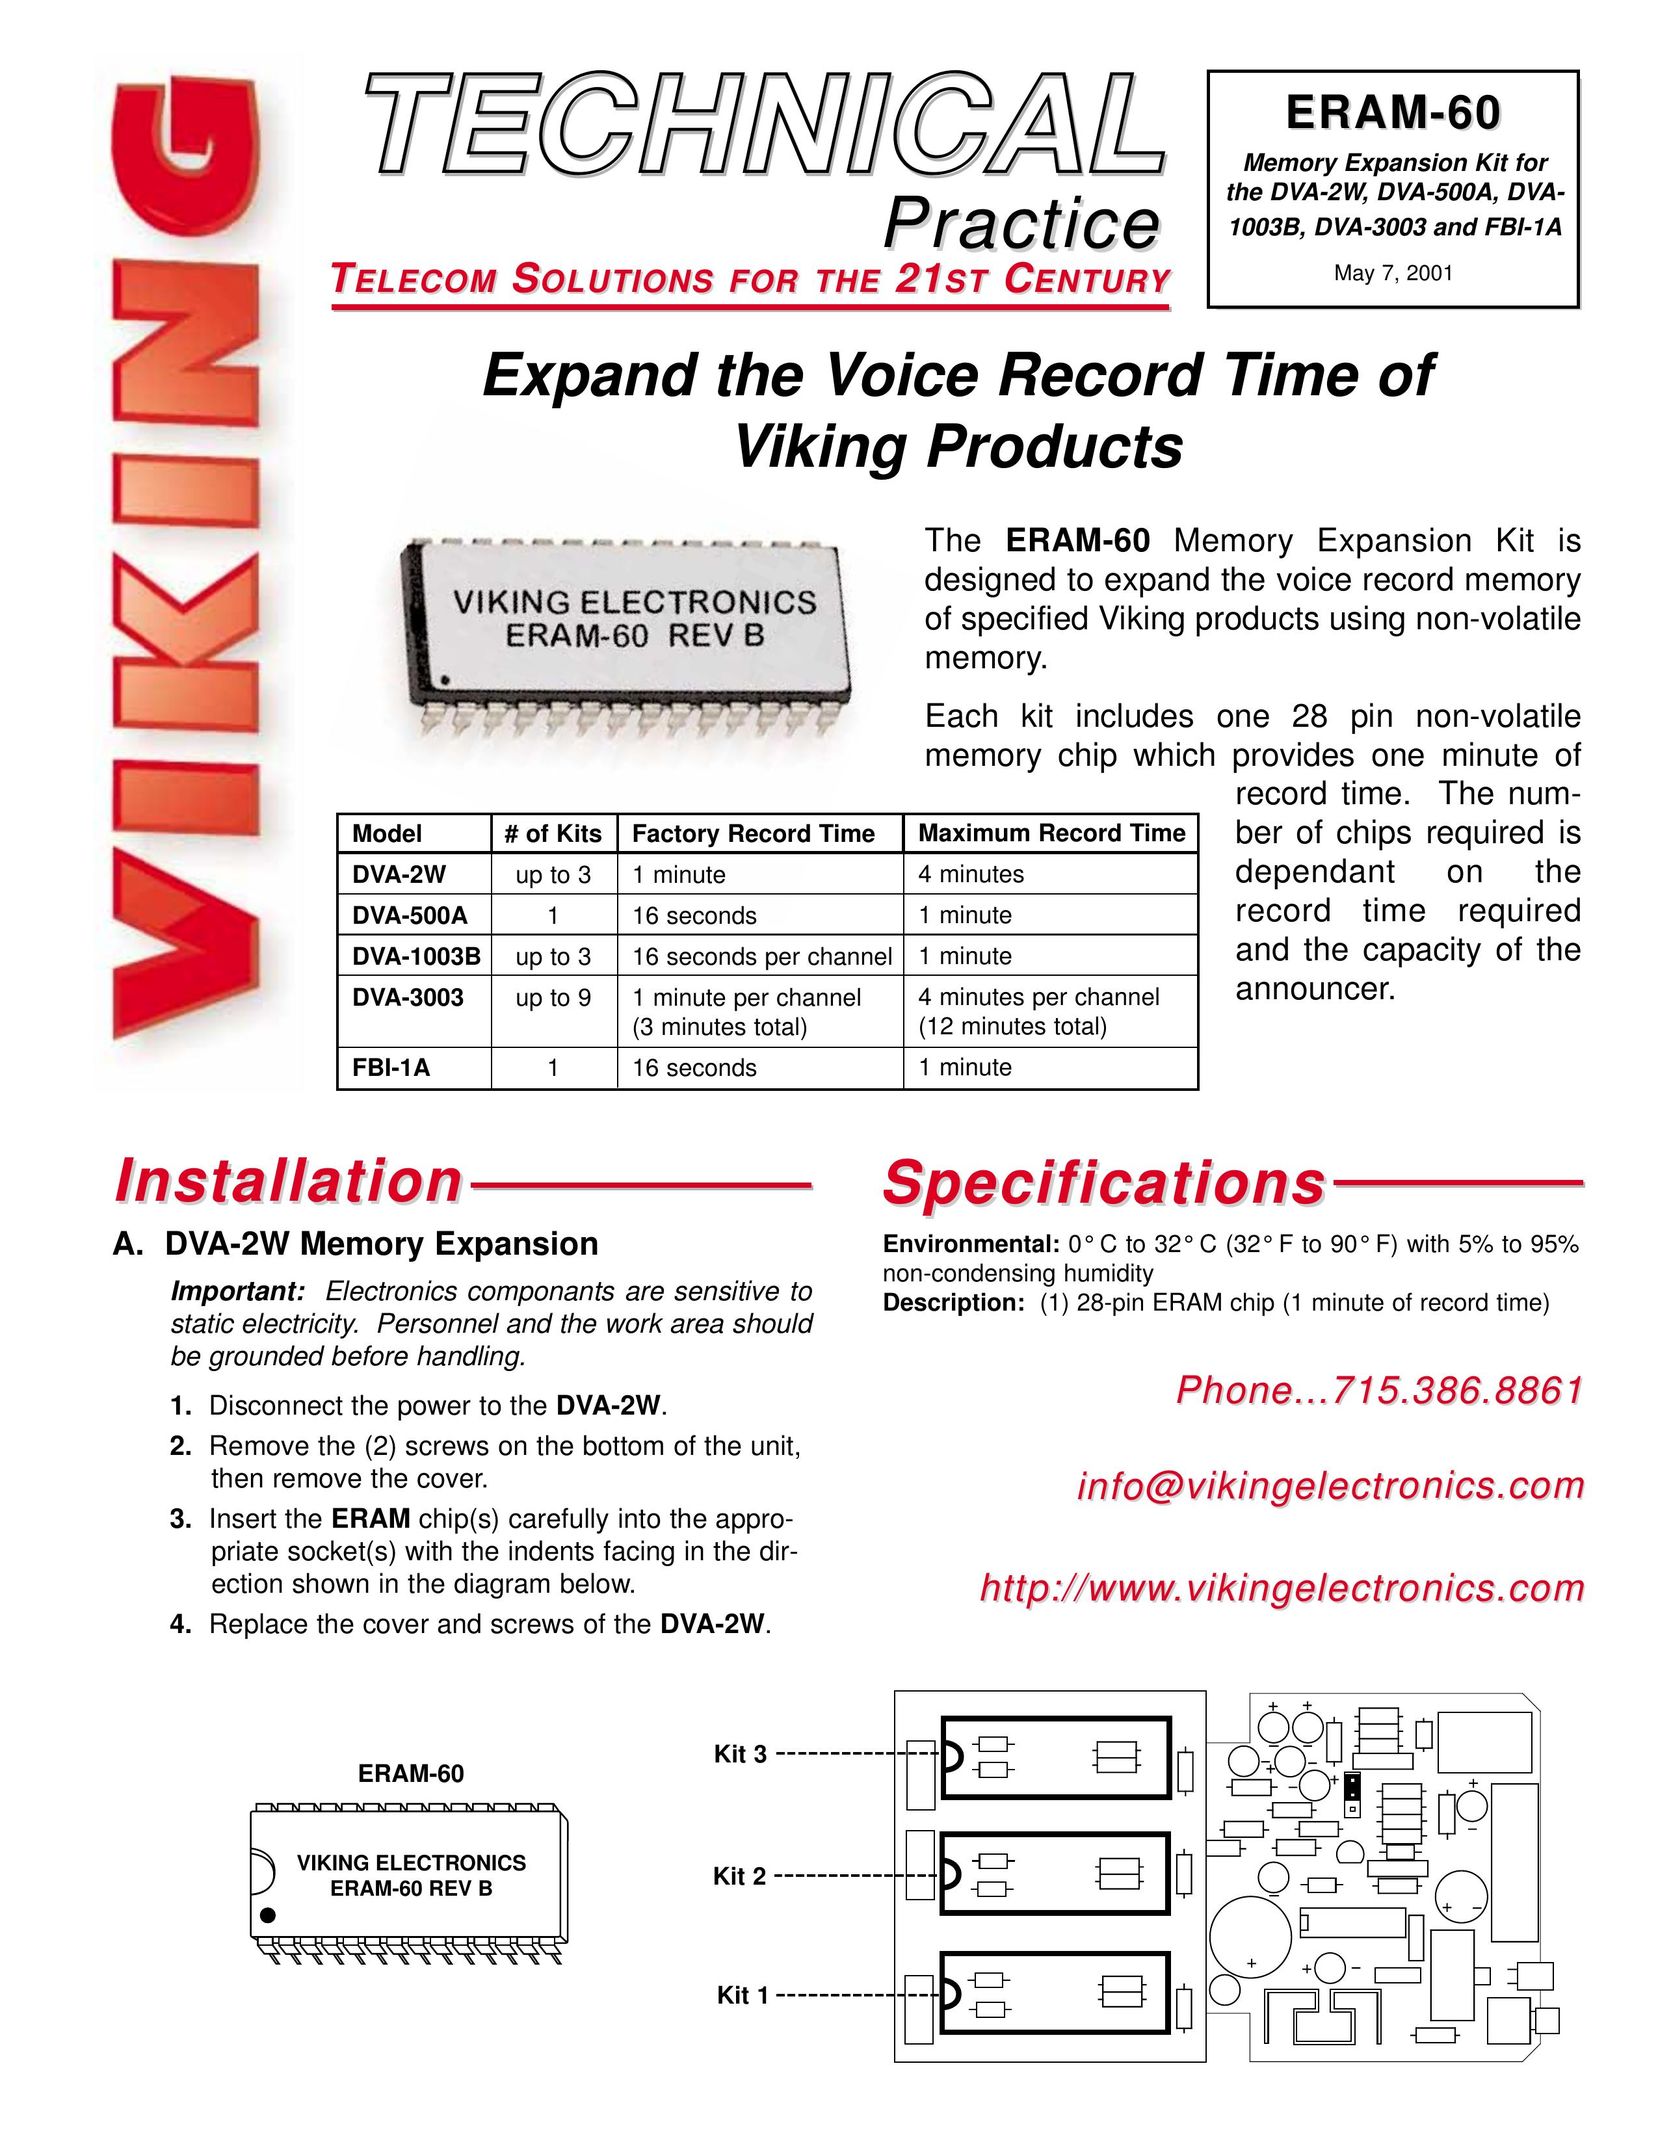 Viking Electronics DVA-3003 Video Gaming Accessories User Manual (Page 1)